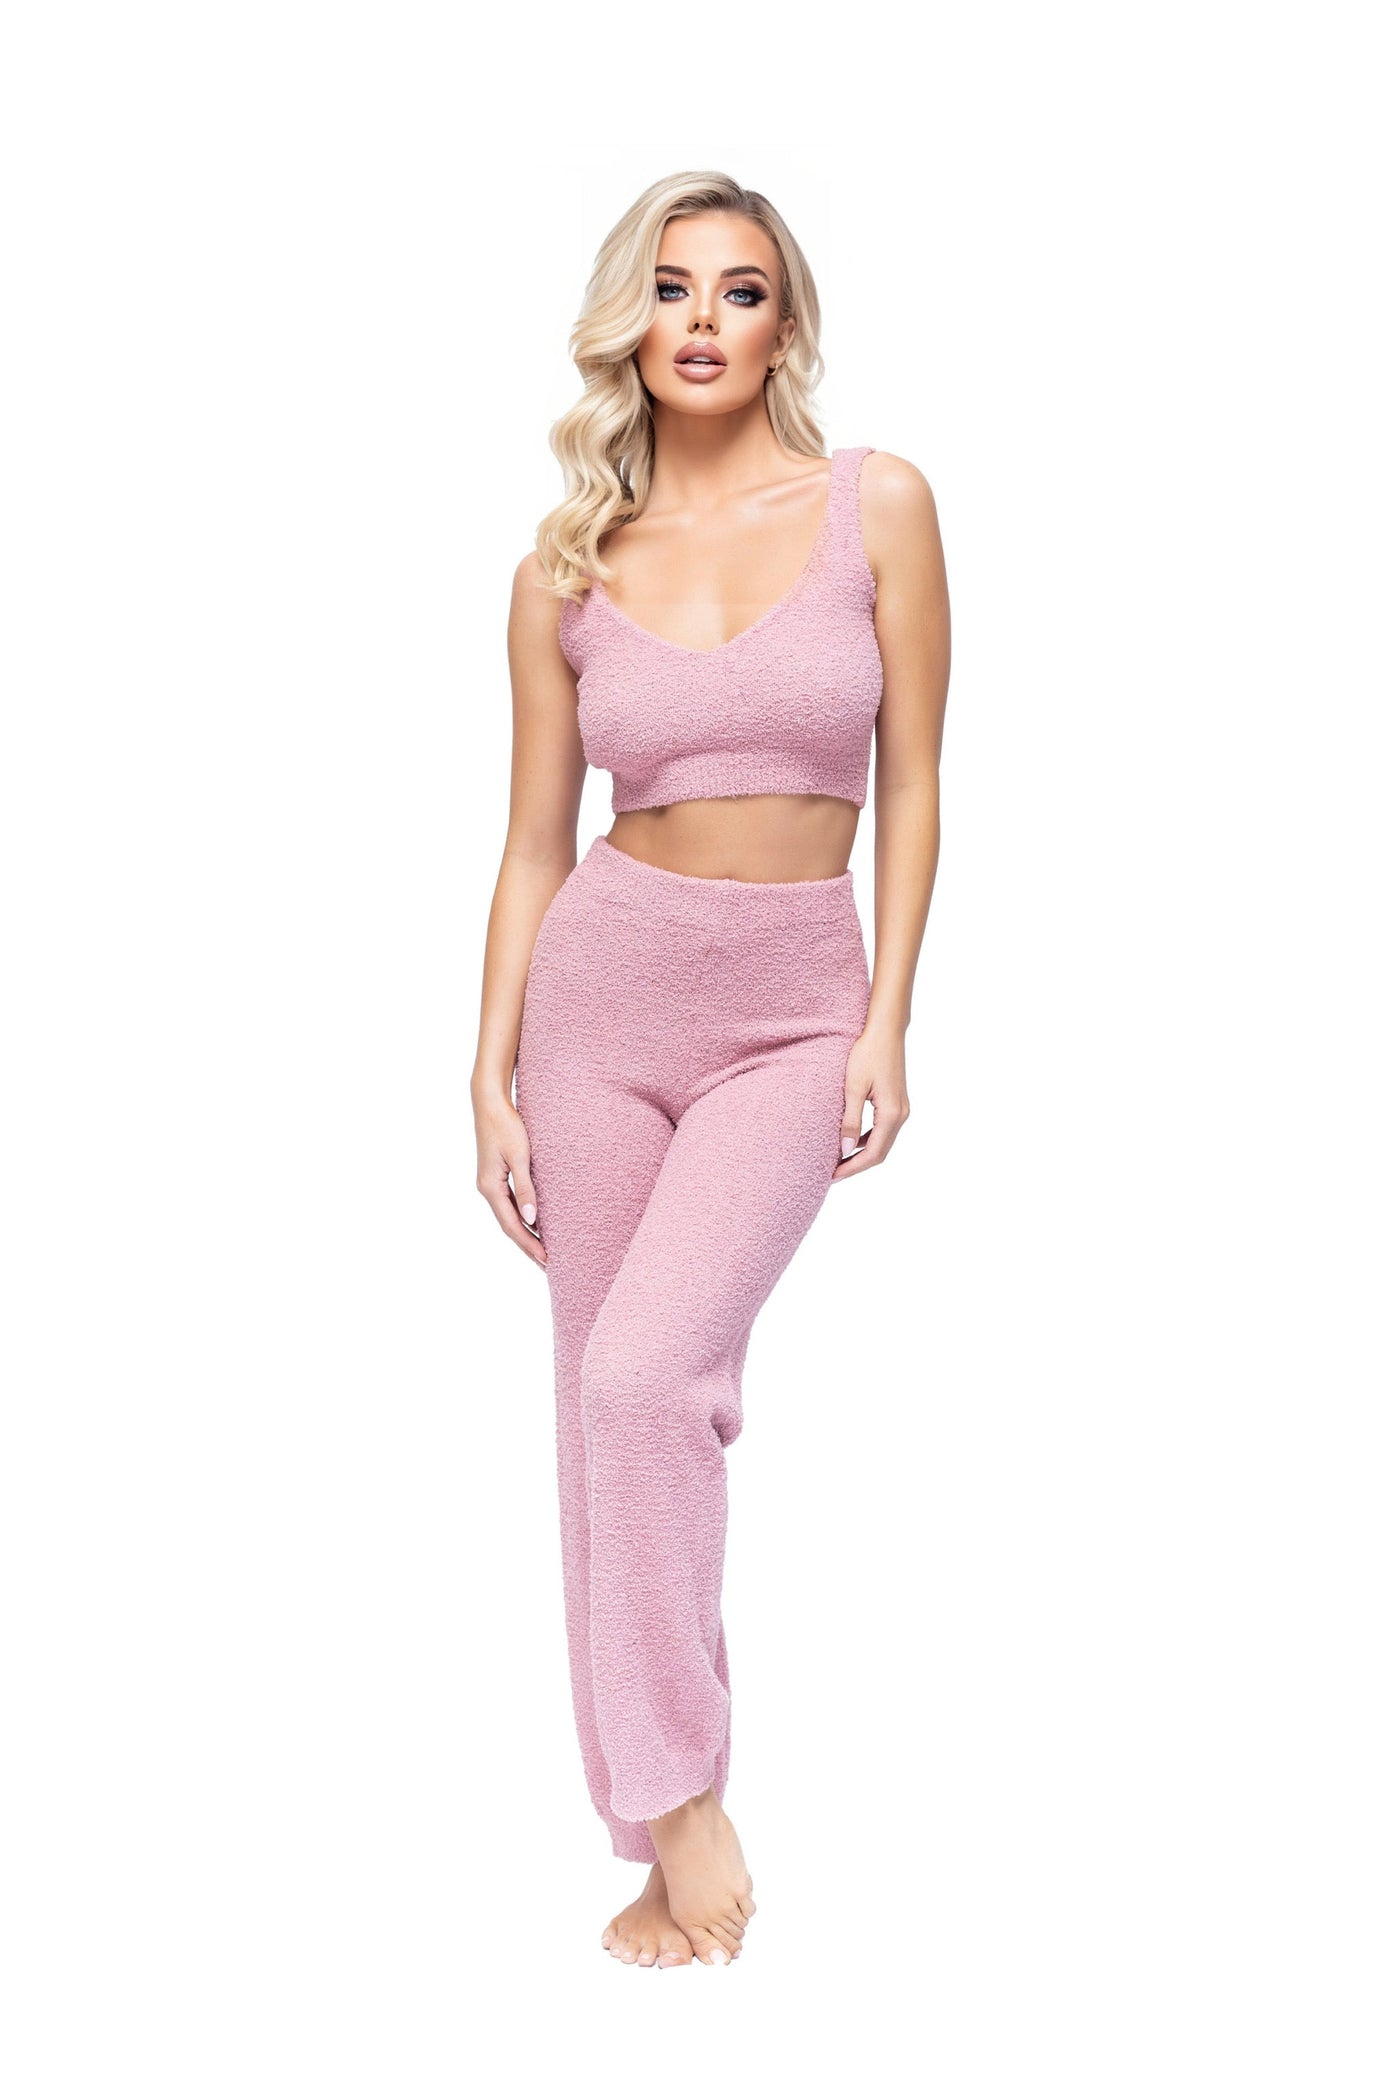 2 Piece Set. Women's Ultra Luxurious Soft and Cozy Matching Tank Top and Pants Loungewear Set - Pink - Small, Medium, Large